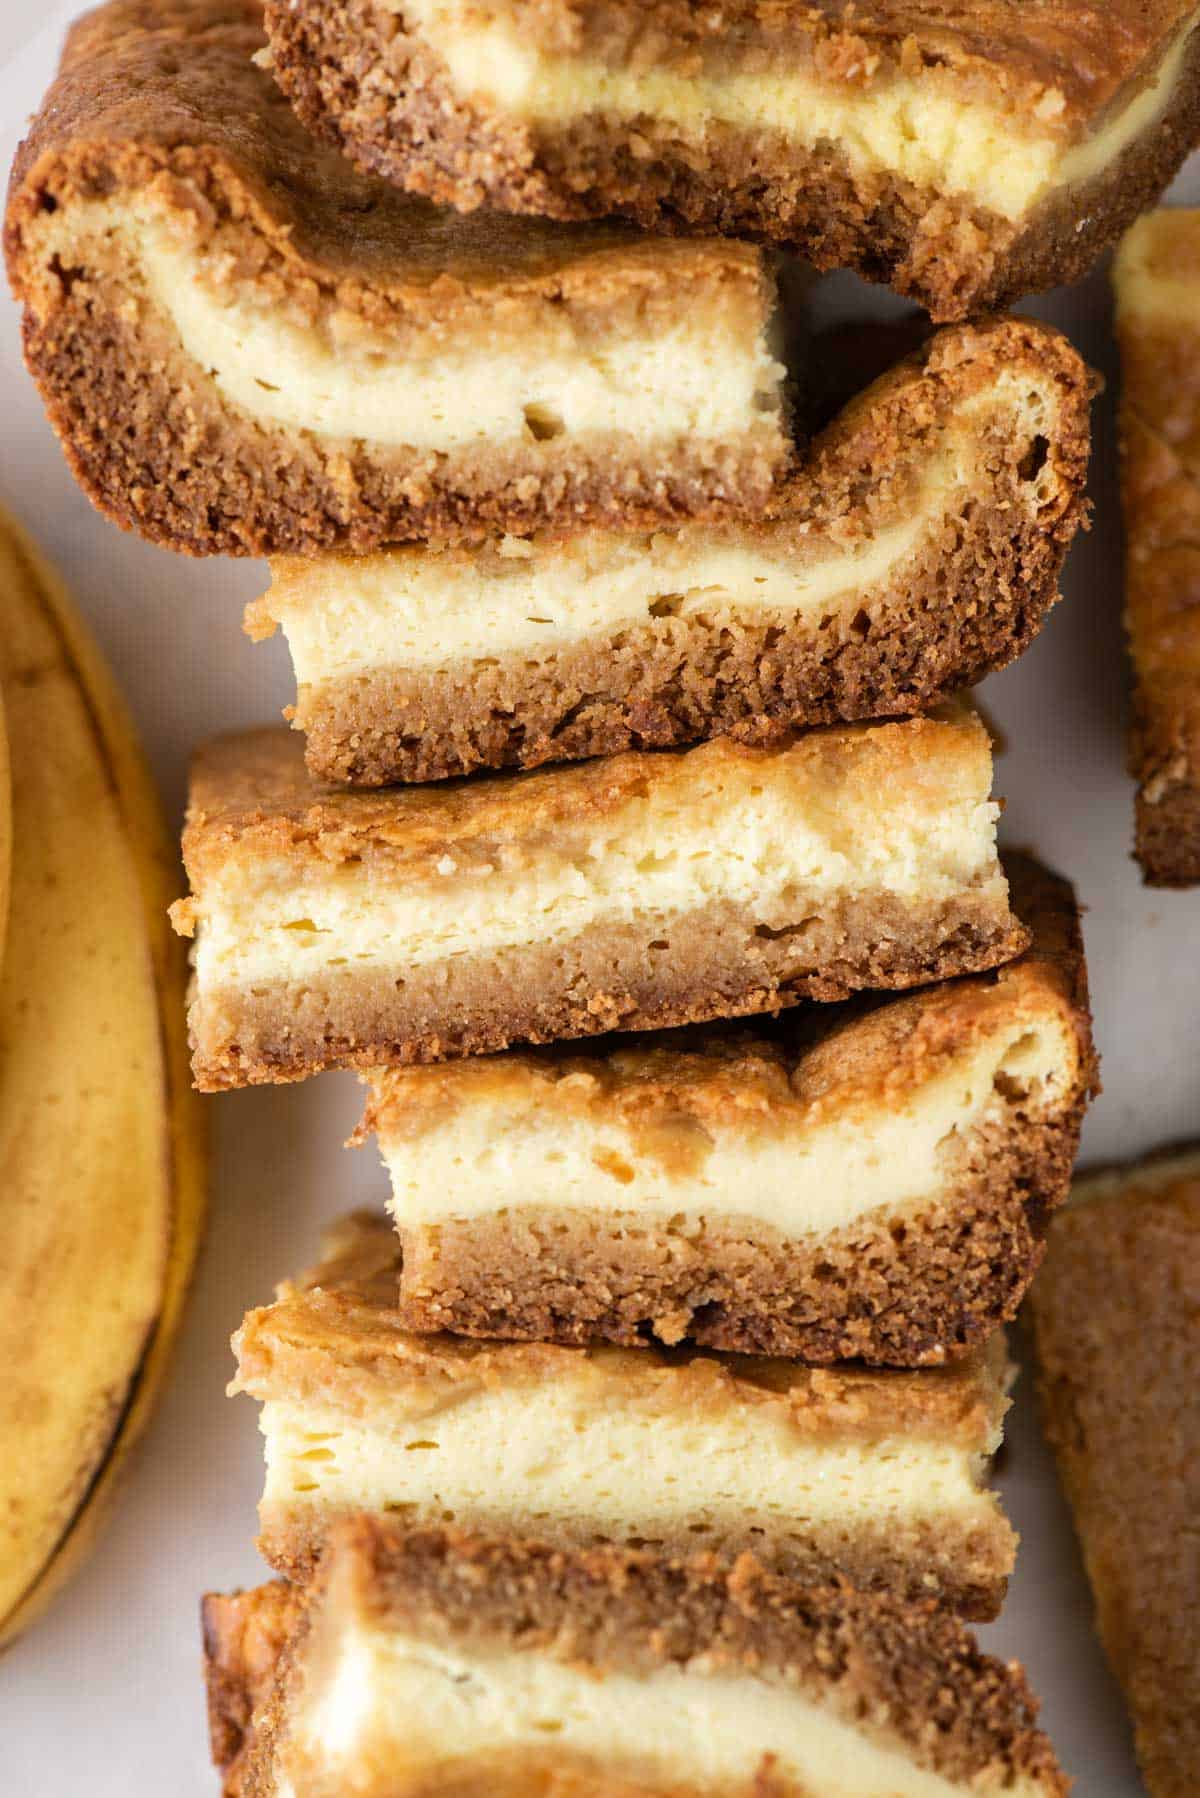 A stack of banana pudding brownies beside a banana